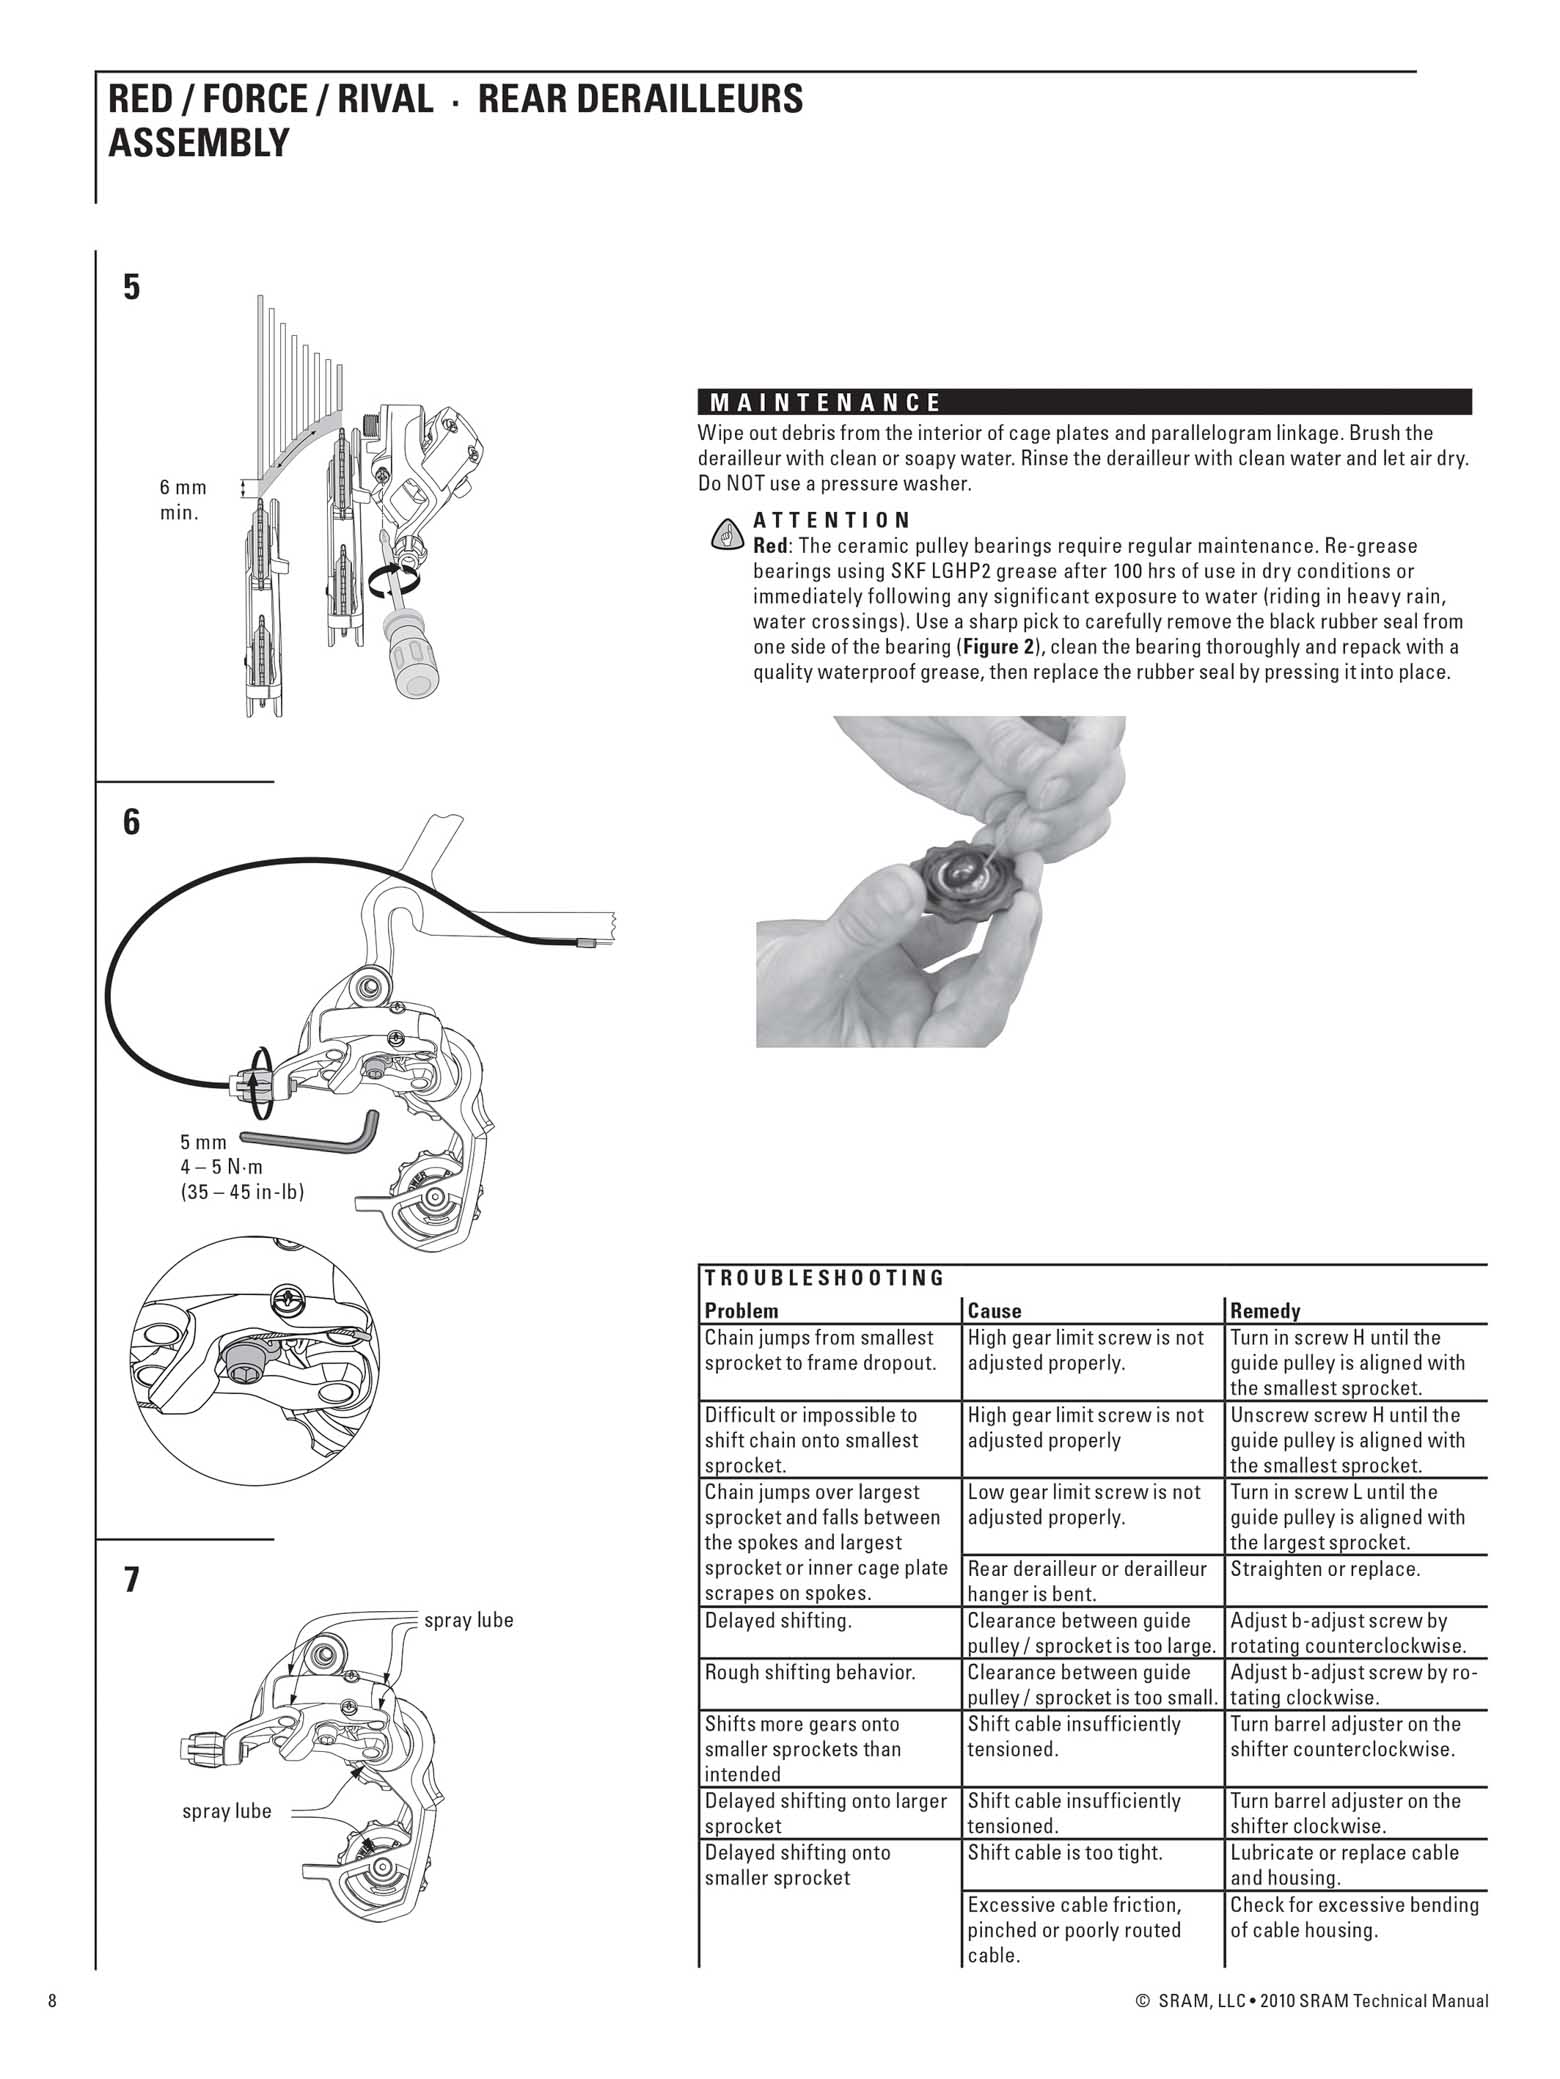 SRAM Technical Manual 2010 page 008 main image